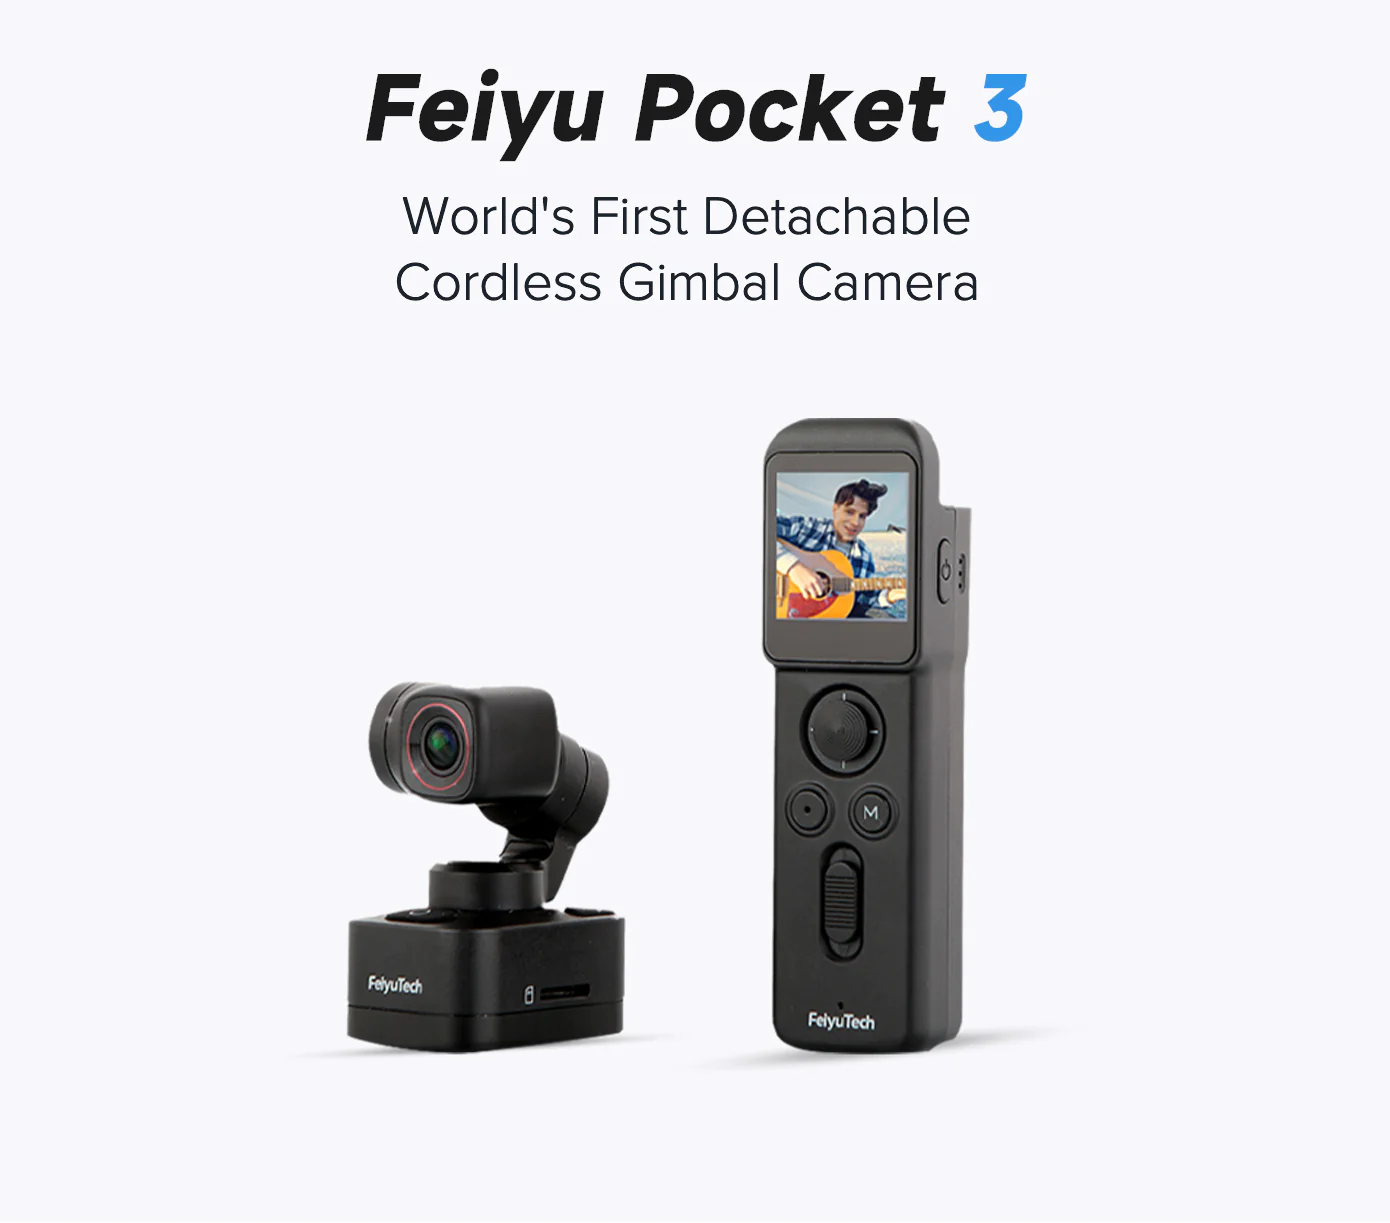 Pocket 3 Feiyu-tech 3-Axis 4K detachable gimbal camera kit